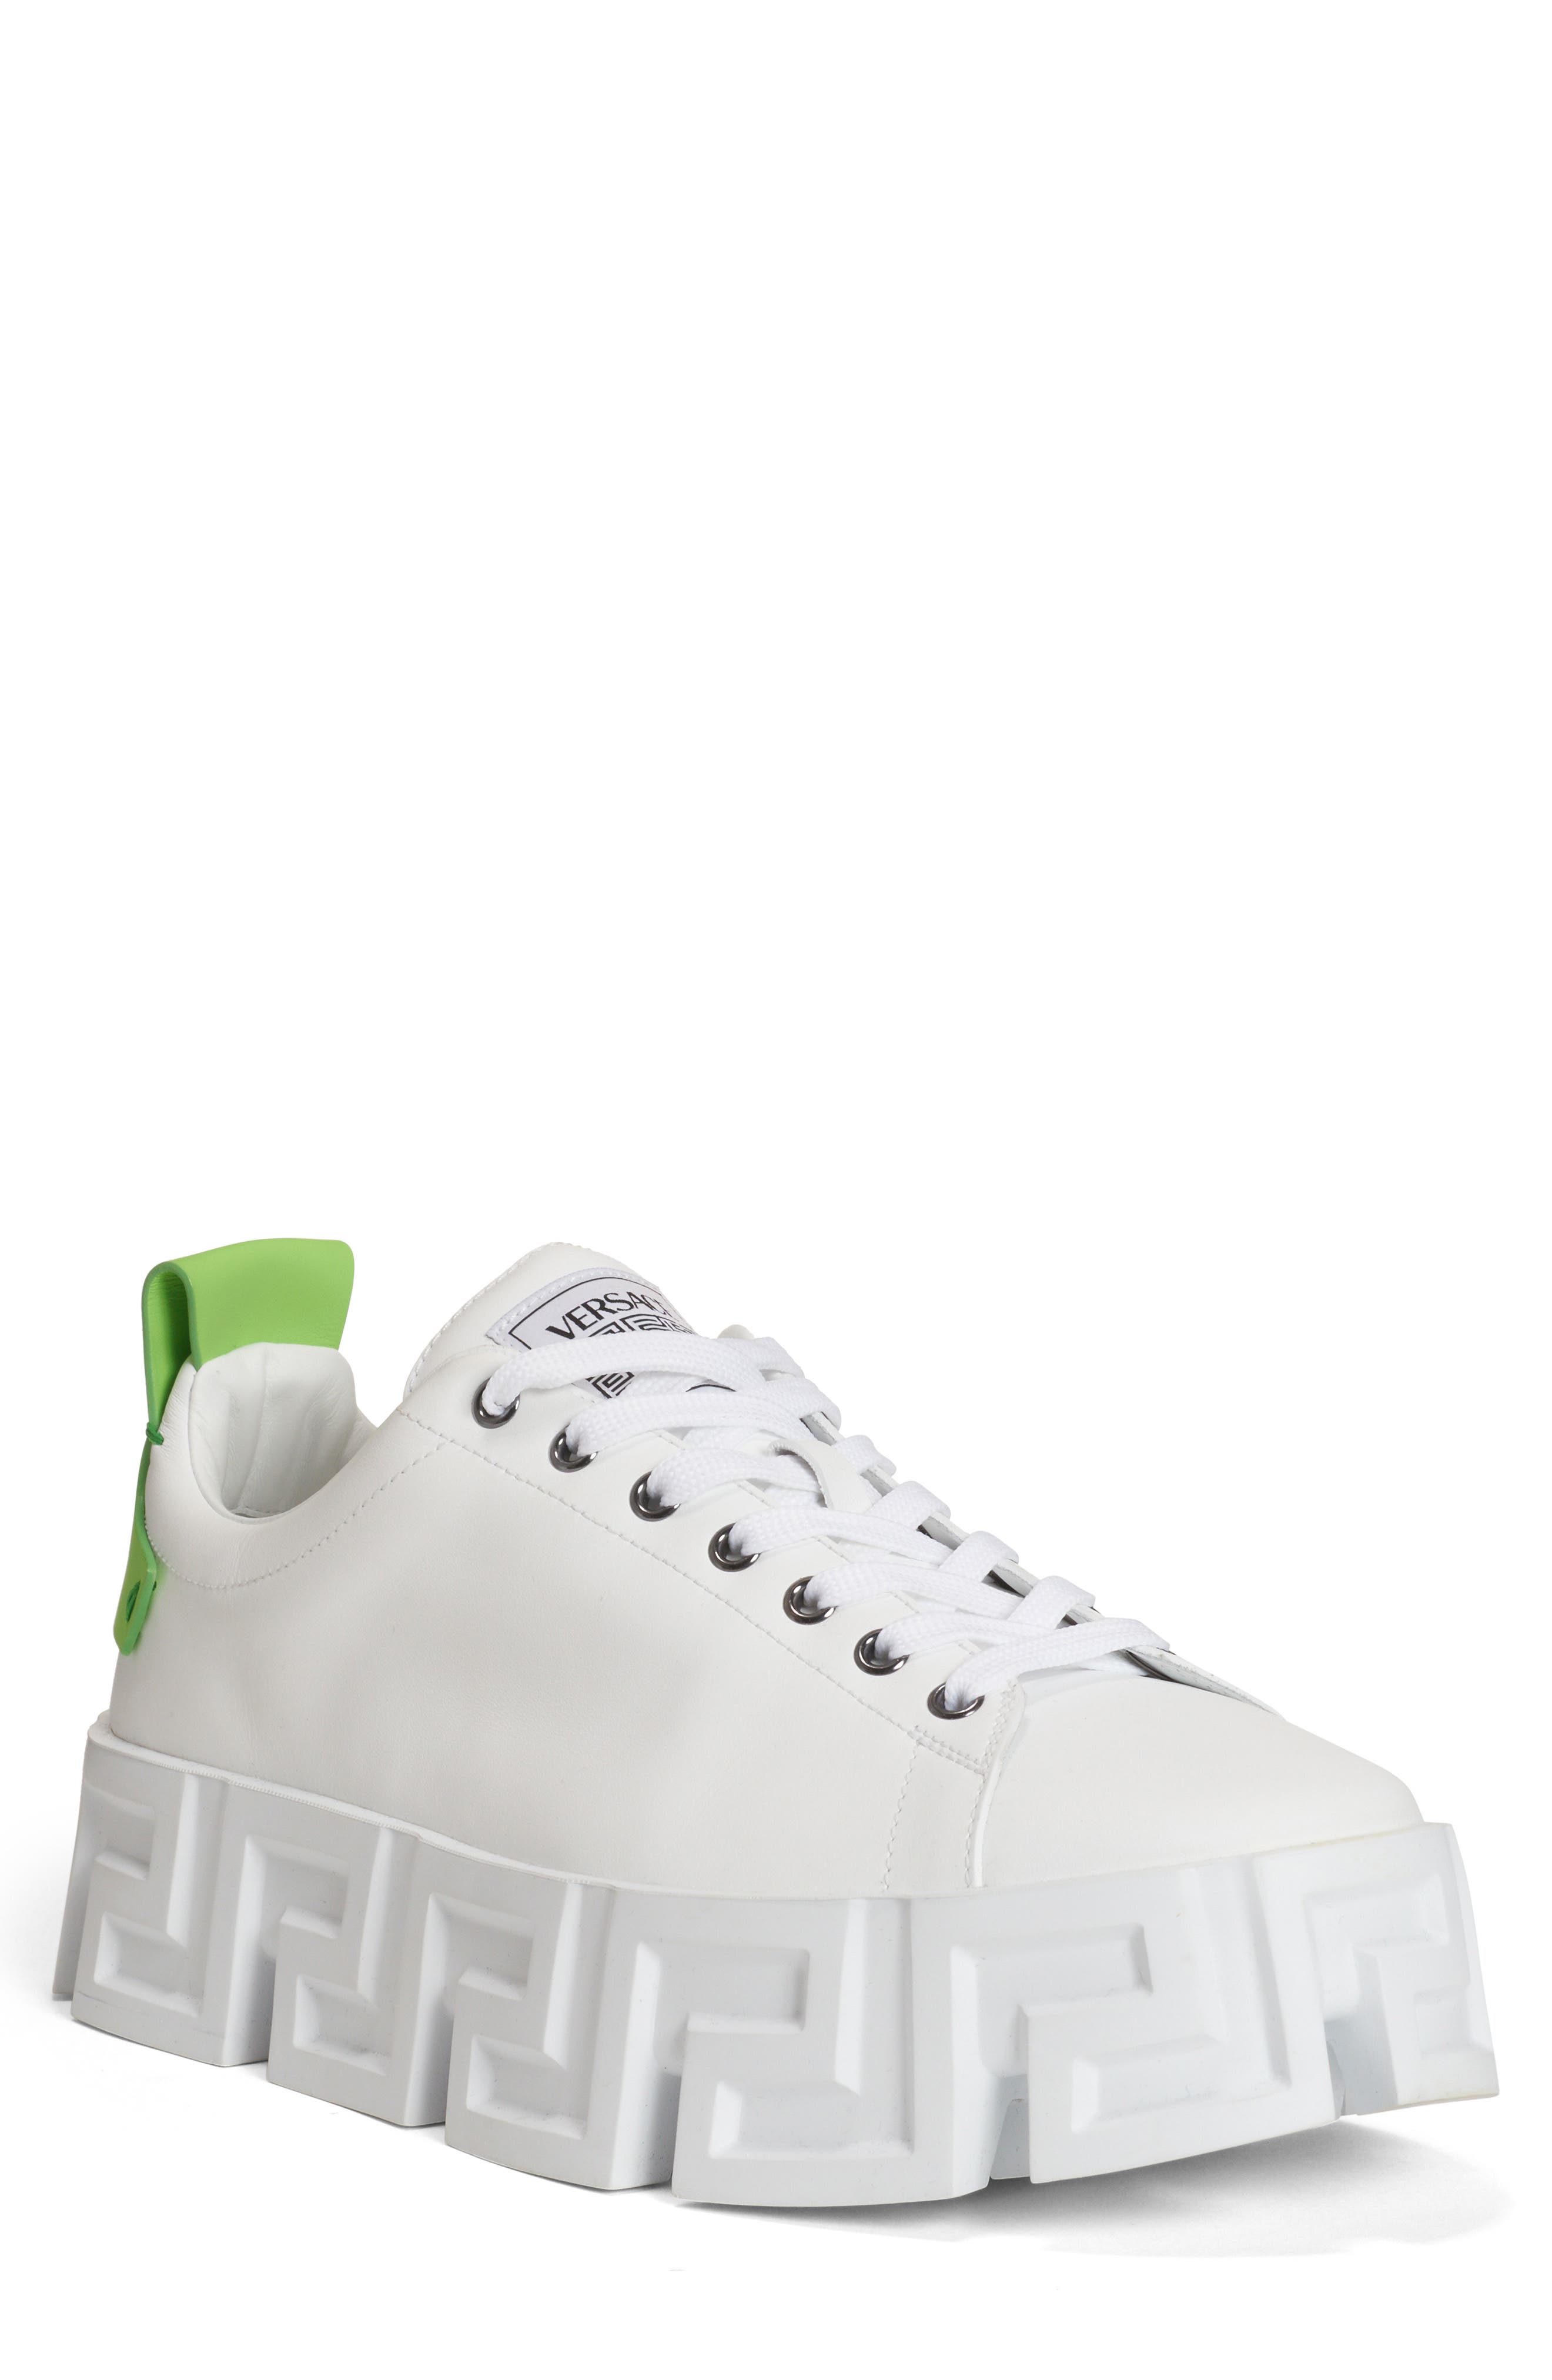 Versace Greca Platform Sneaker in White Neon Green White at Nordstrom, Size 9Us